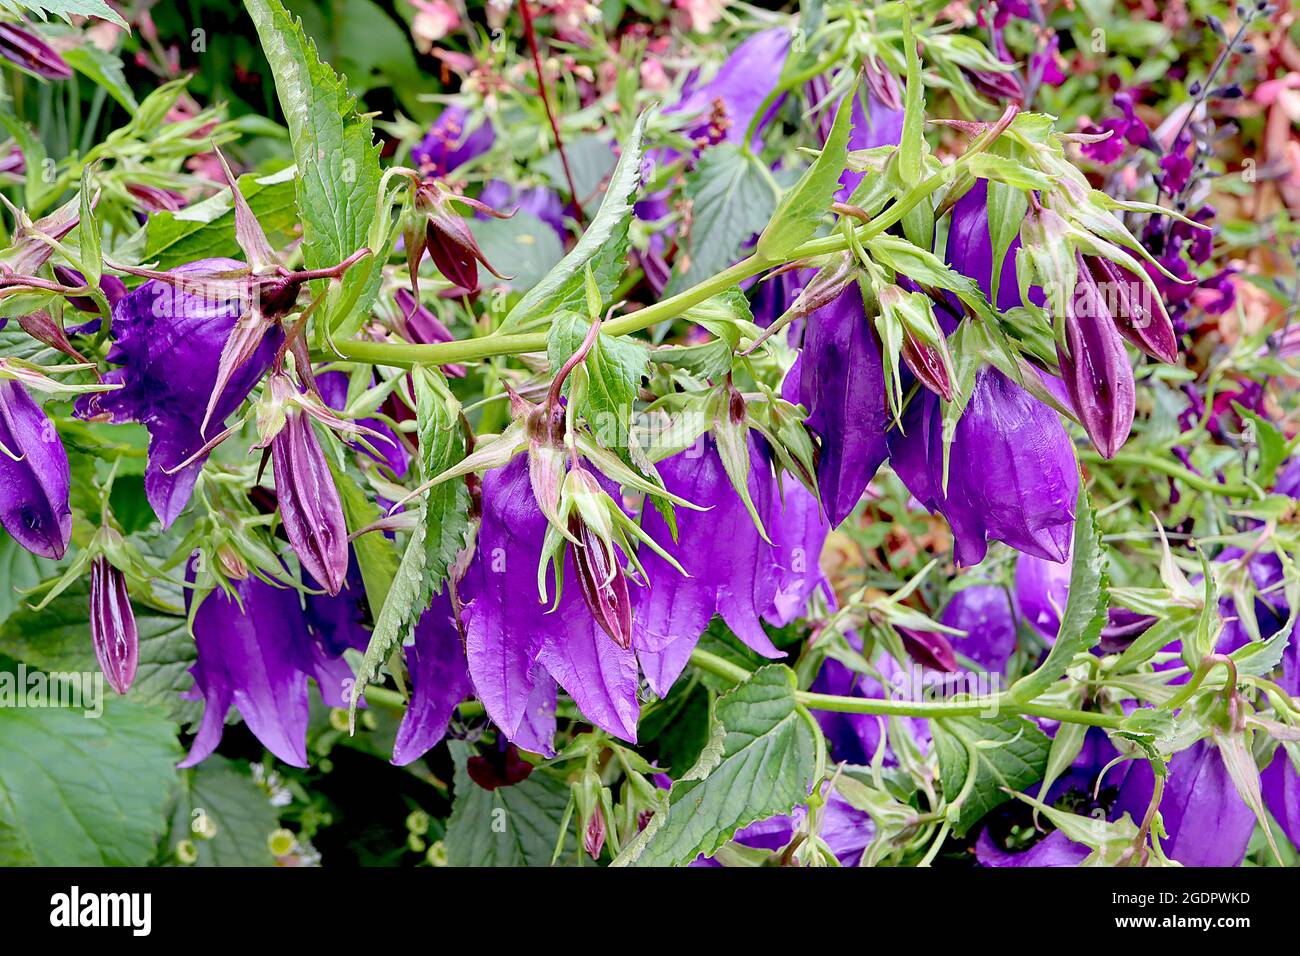 Glockenblume ‘Kent Belle’ Glockenblume Kent Belle - hängende glockenförmige dunkelviolette Blüten, Juli, England, Großbritannien Stockfoto